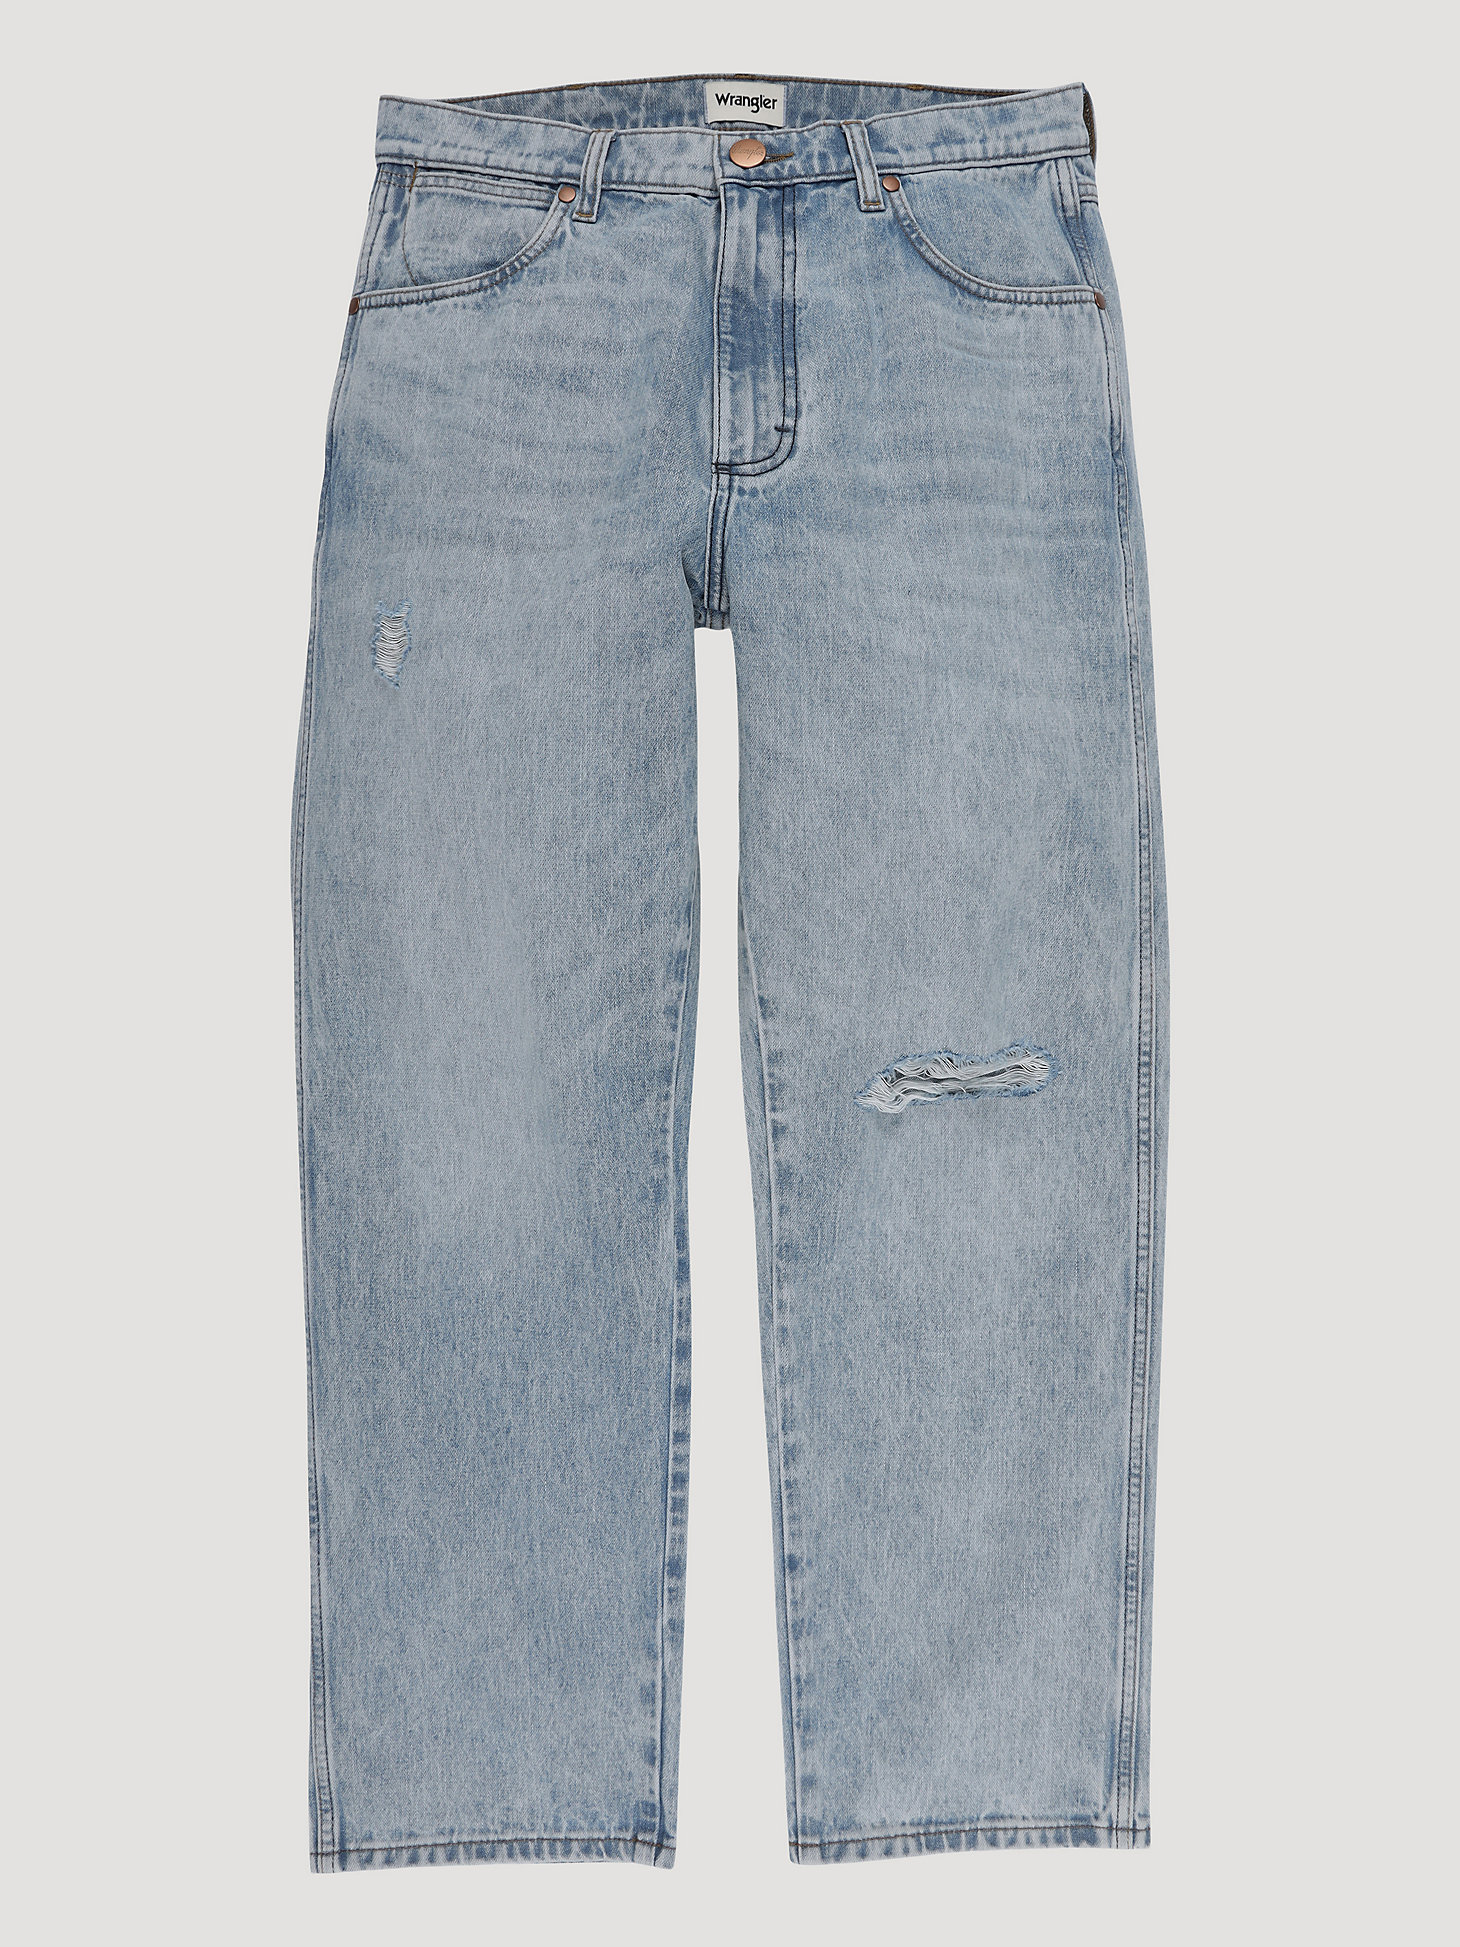 Men's Wrangler® Heritage Redding Loose Fit Jean in Ripped Light Wash alternative view 7